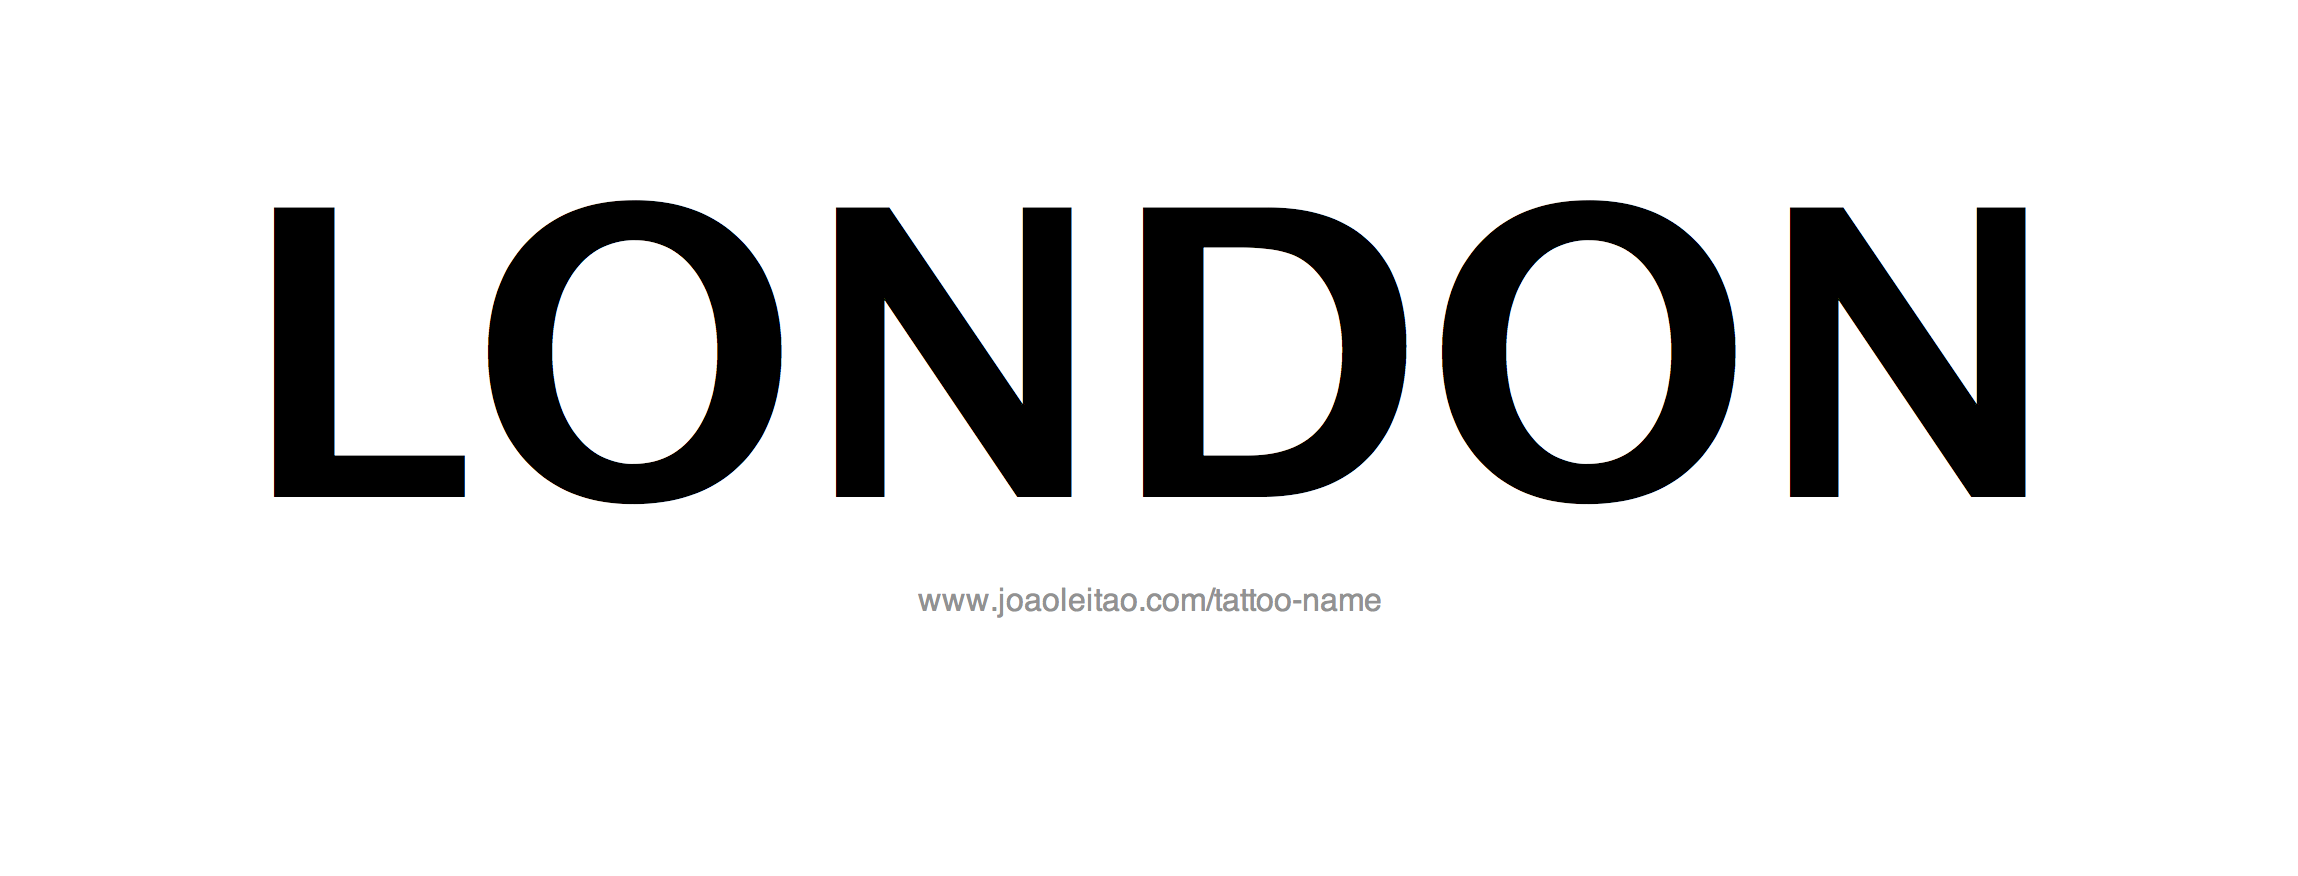 London Name Tattoo Designs